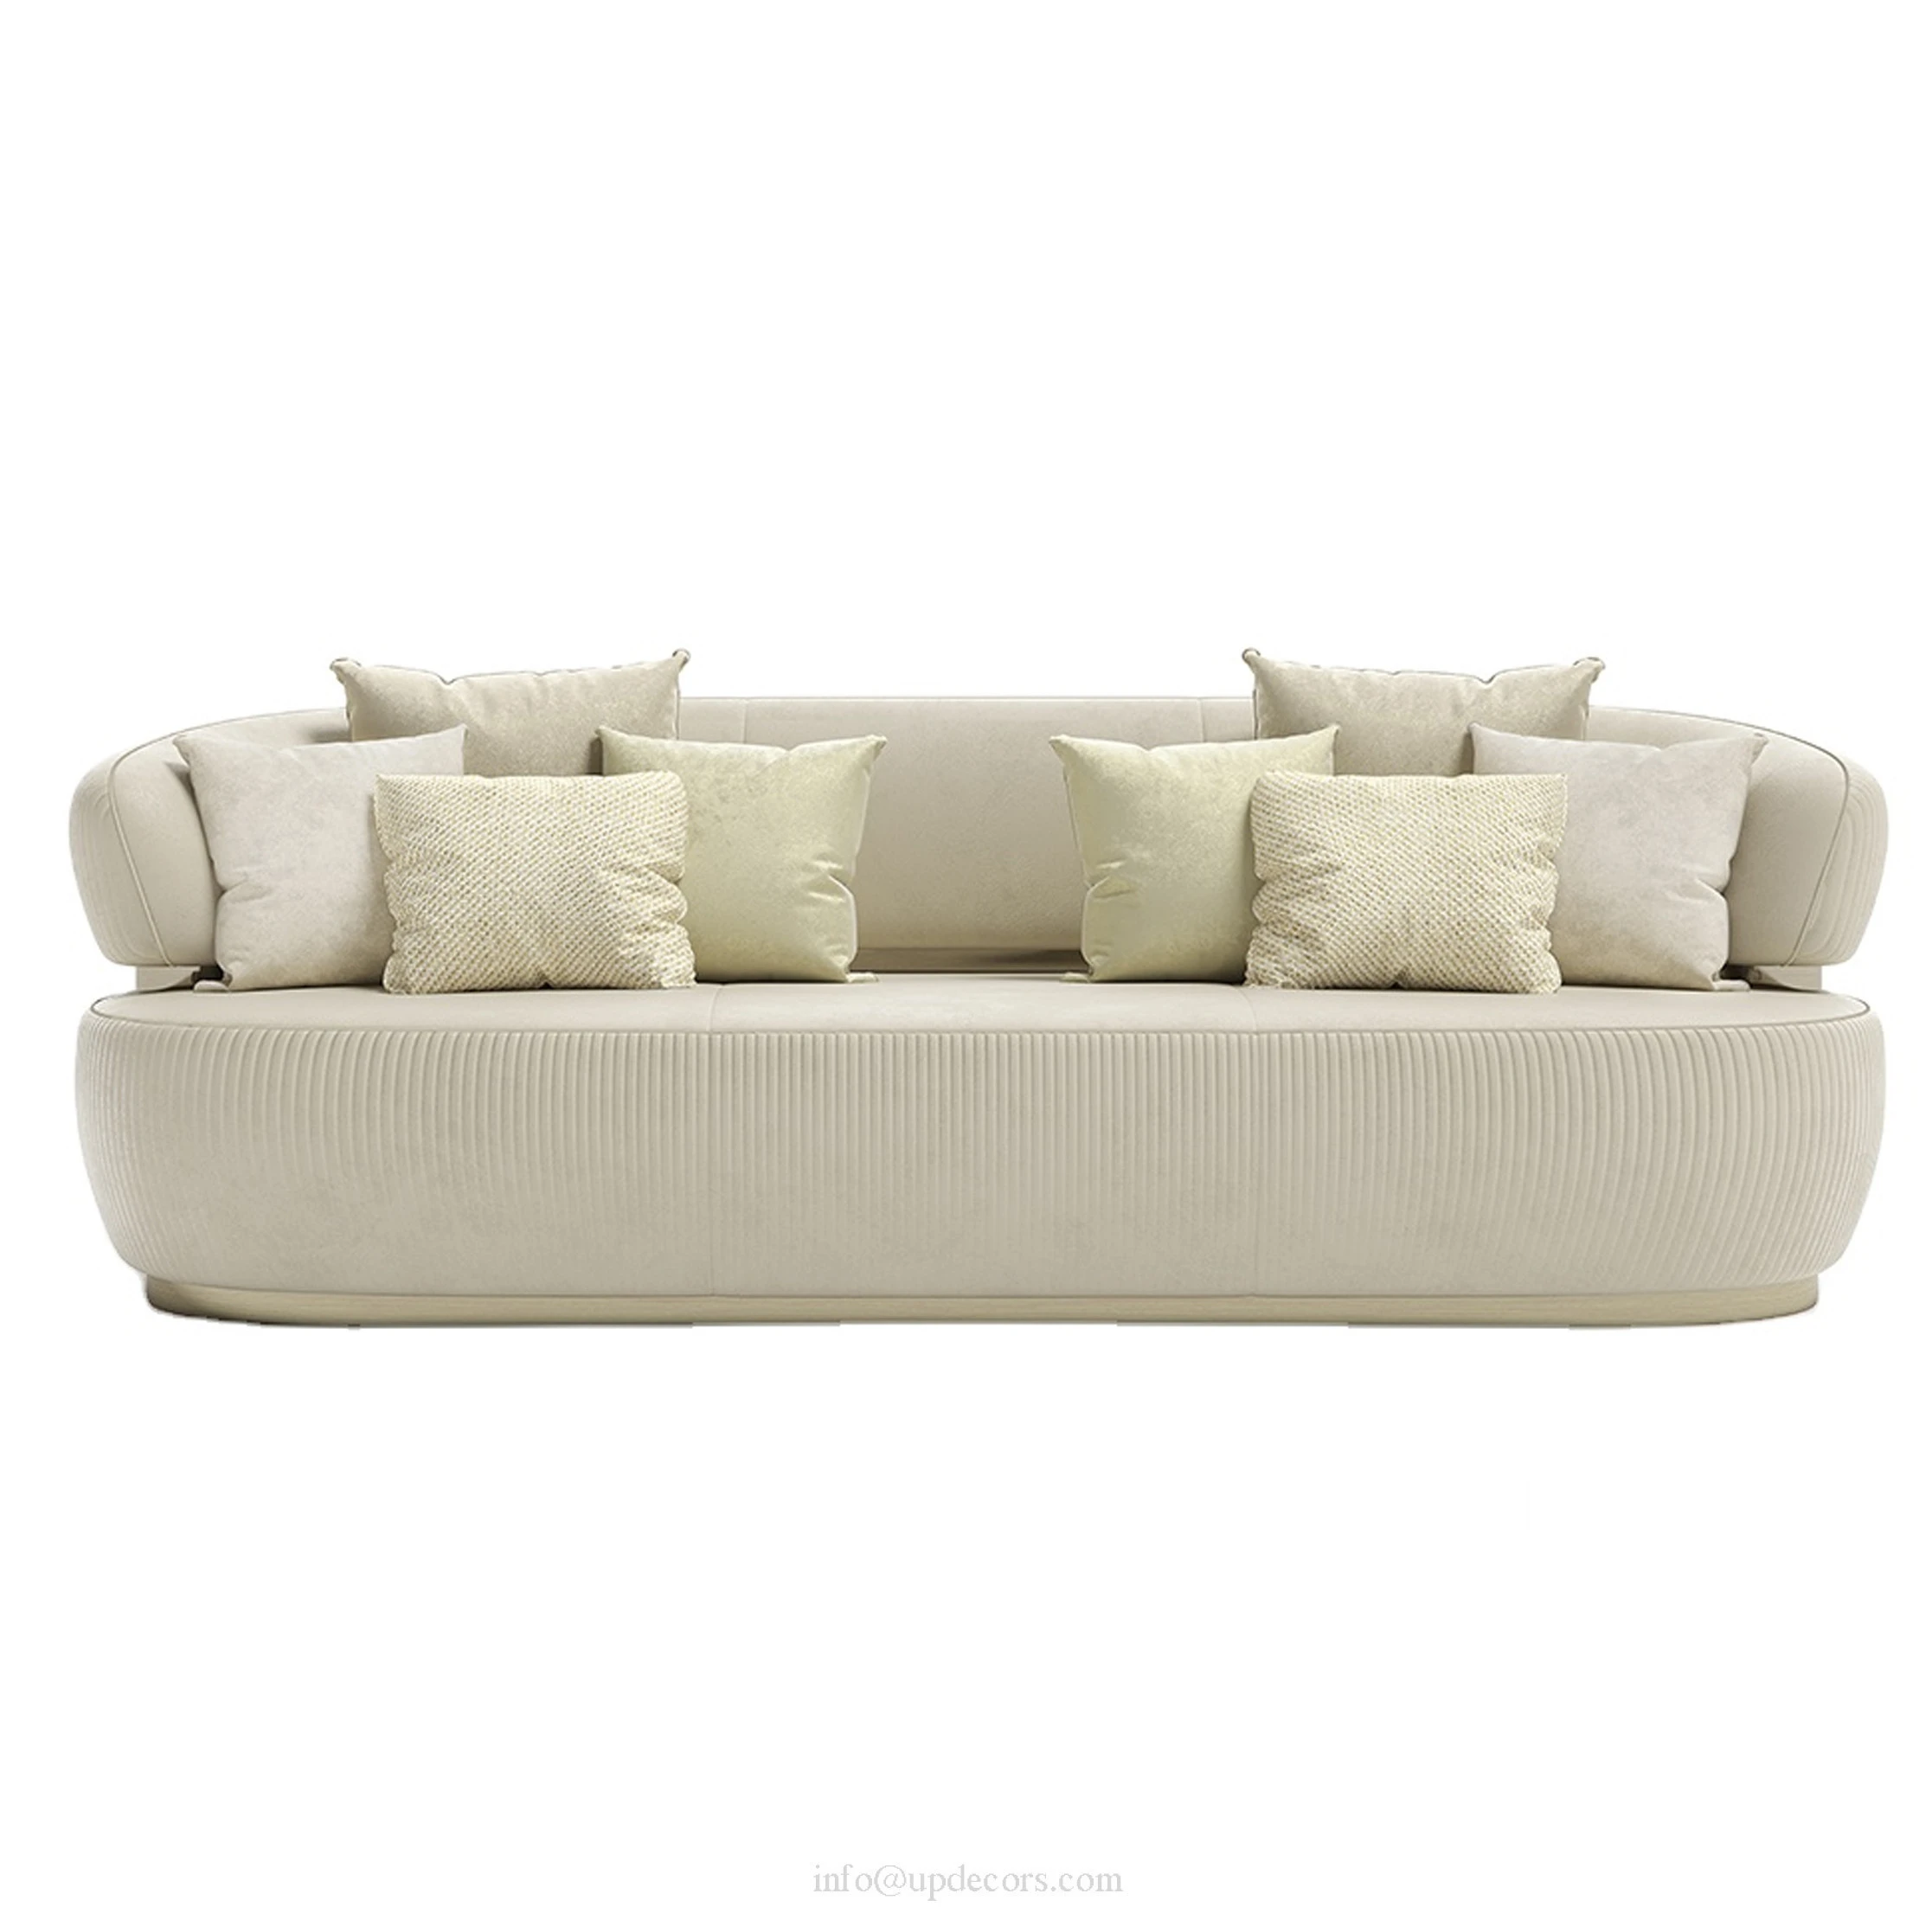 Customize Living Room Sofa Set upholstered sofas For Home Furniture